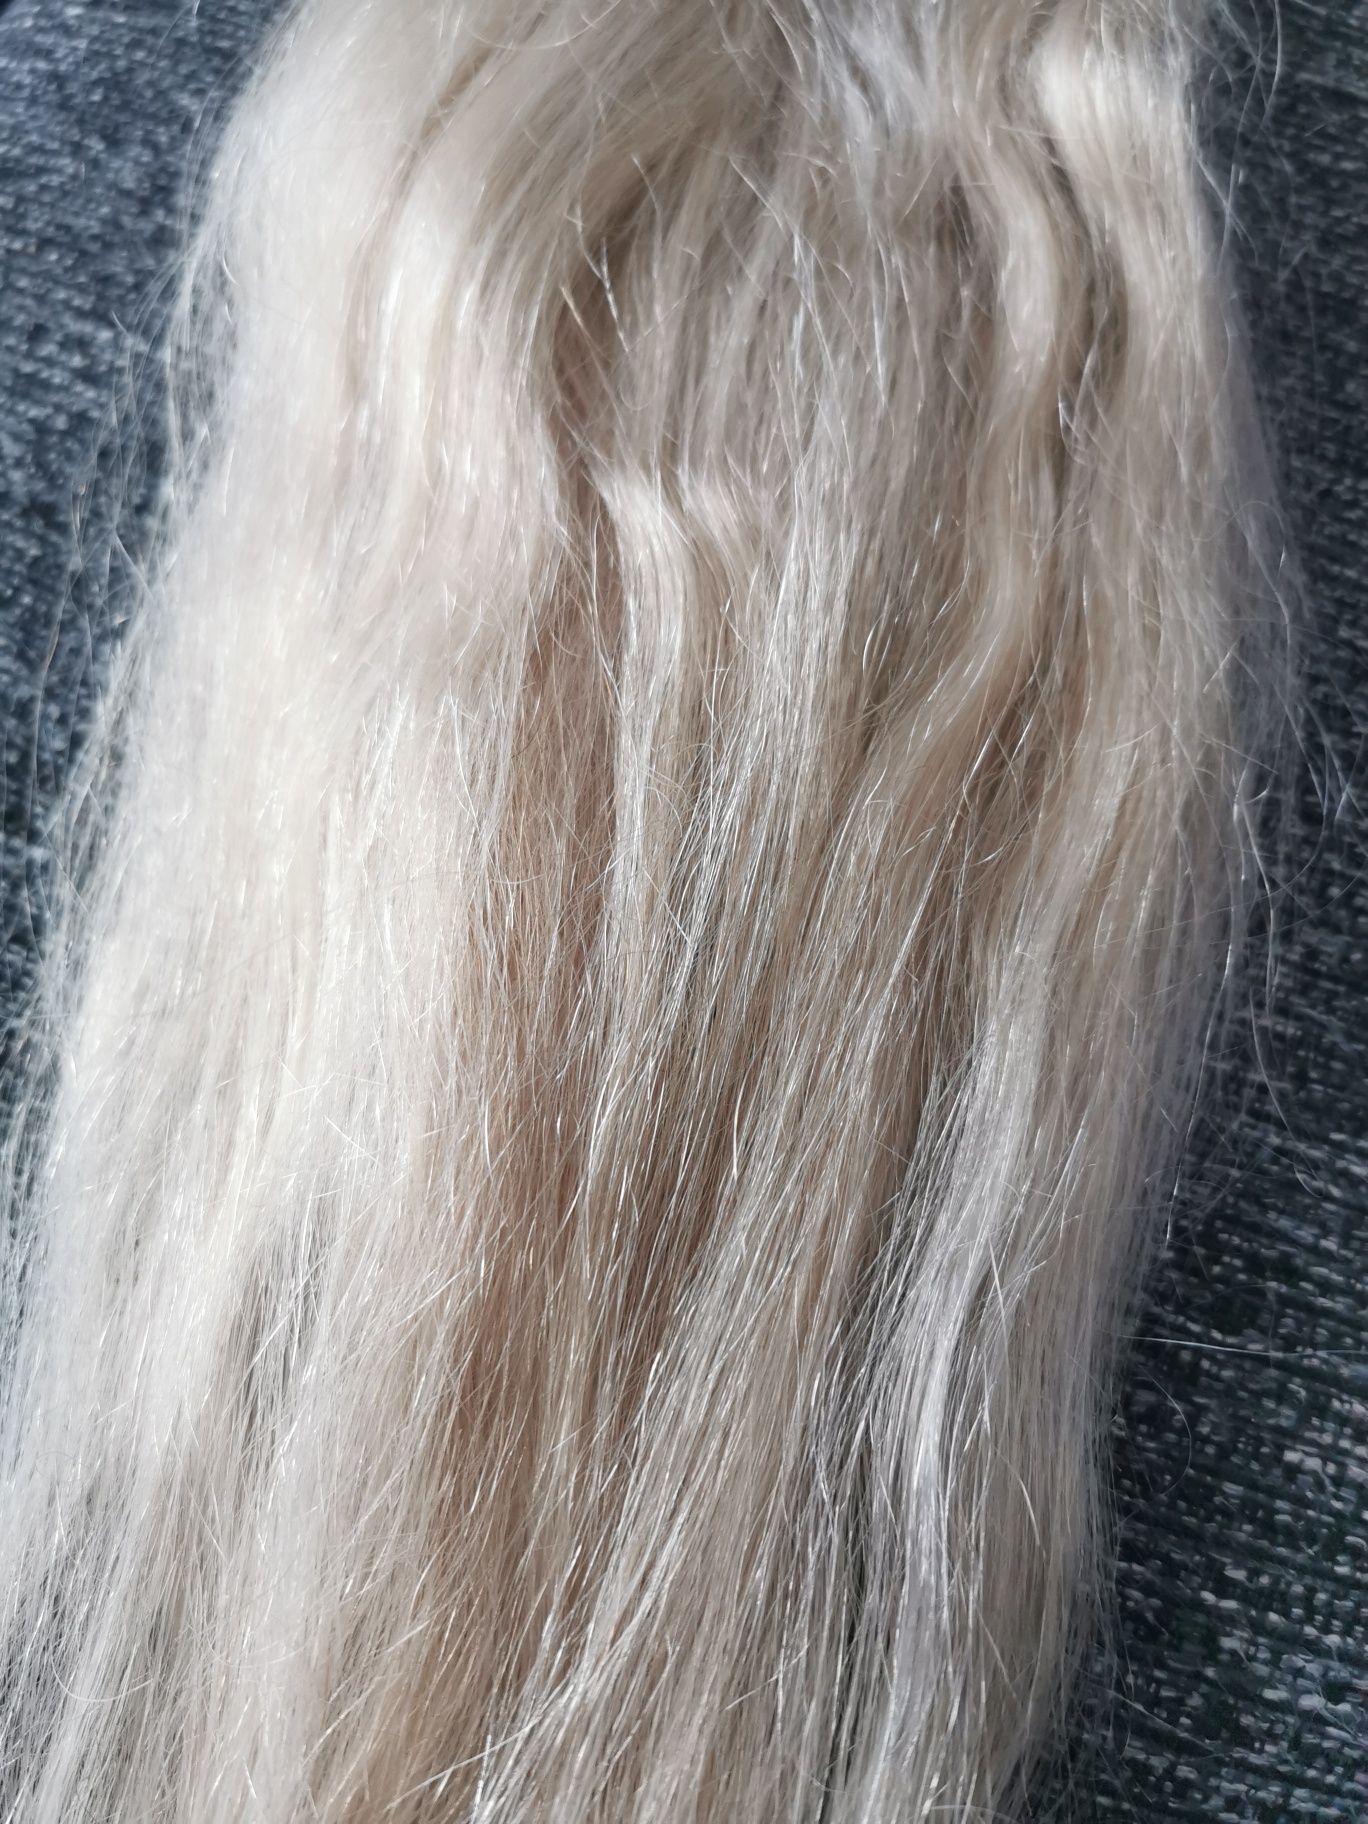 Vând extensii tip coada,par natural, , blond platinat, 60cm